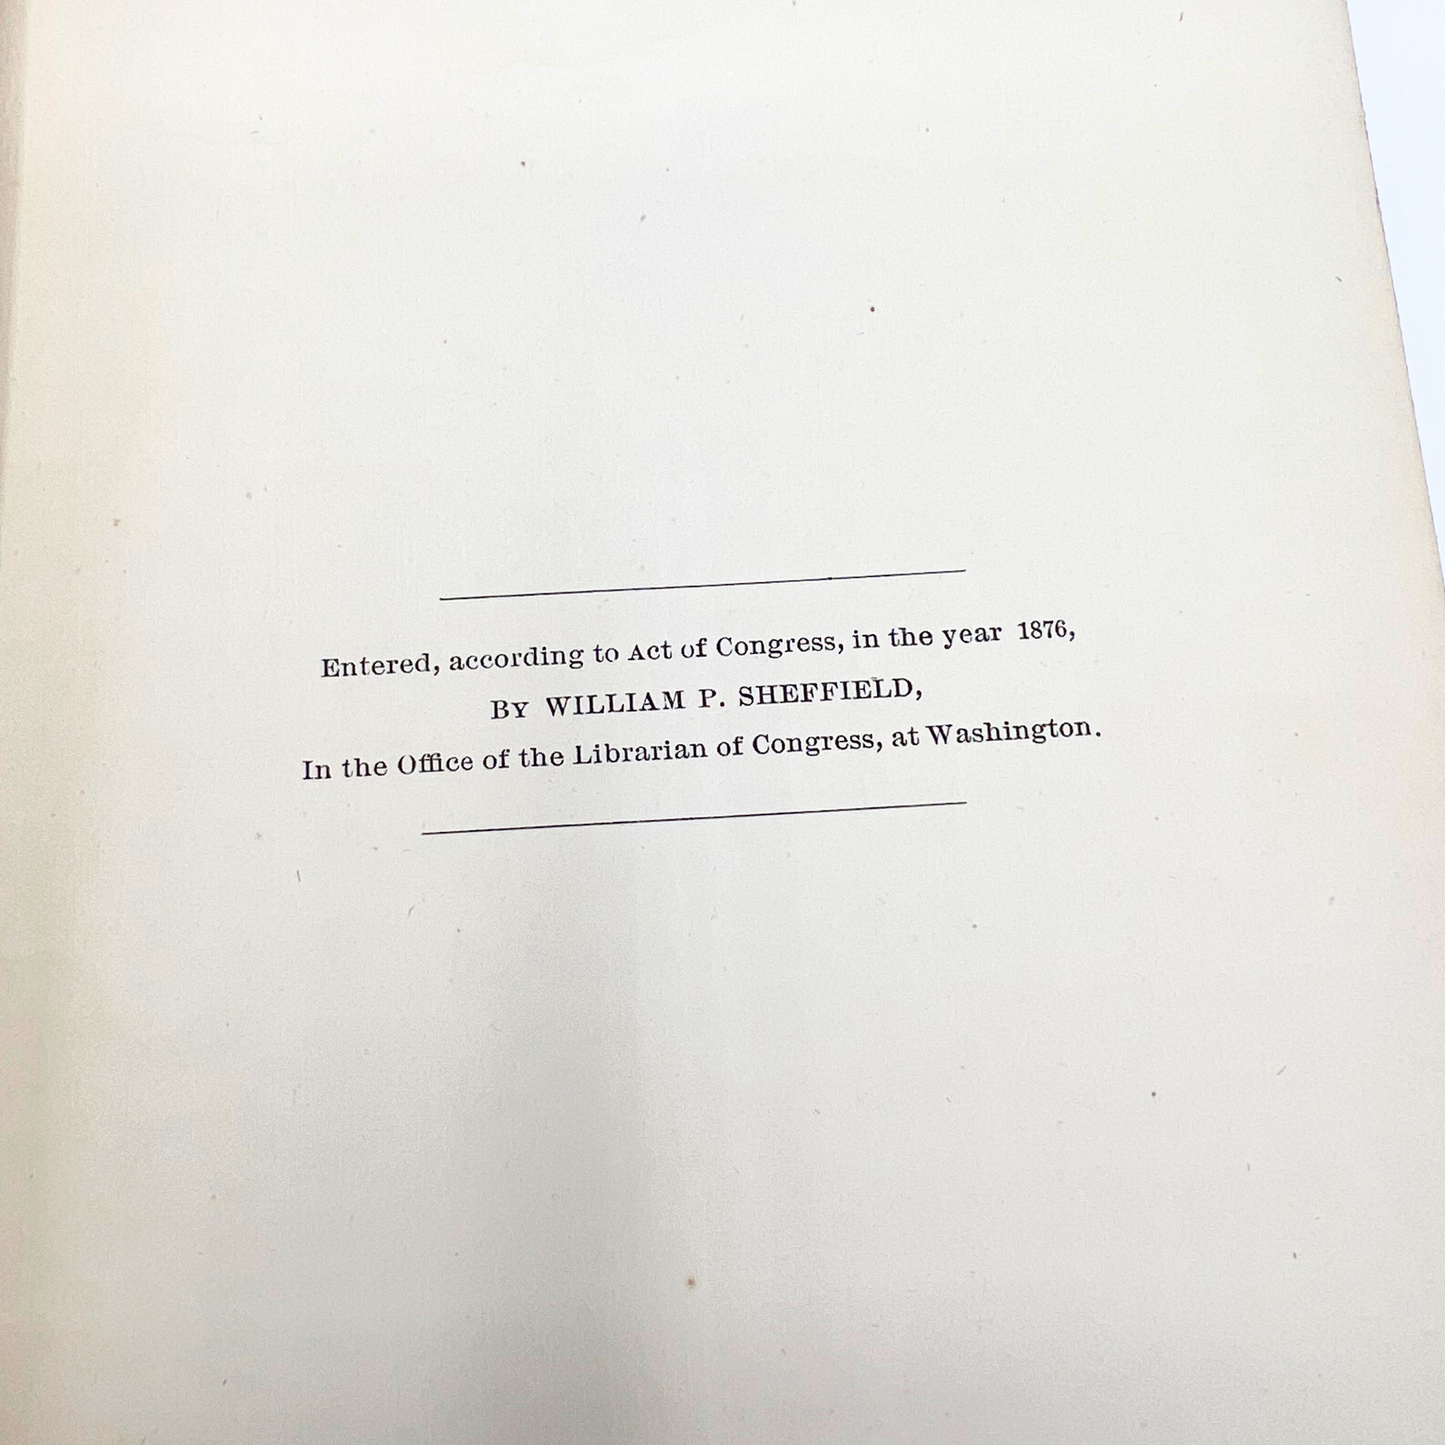 1876 book: A Historical Sketch of Block Island